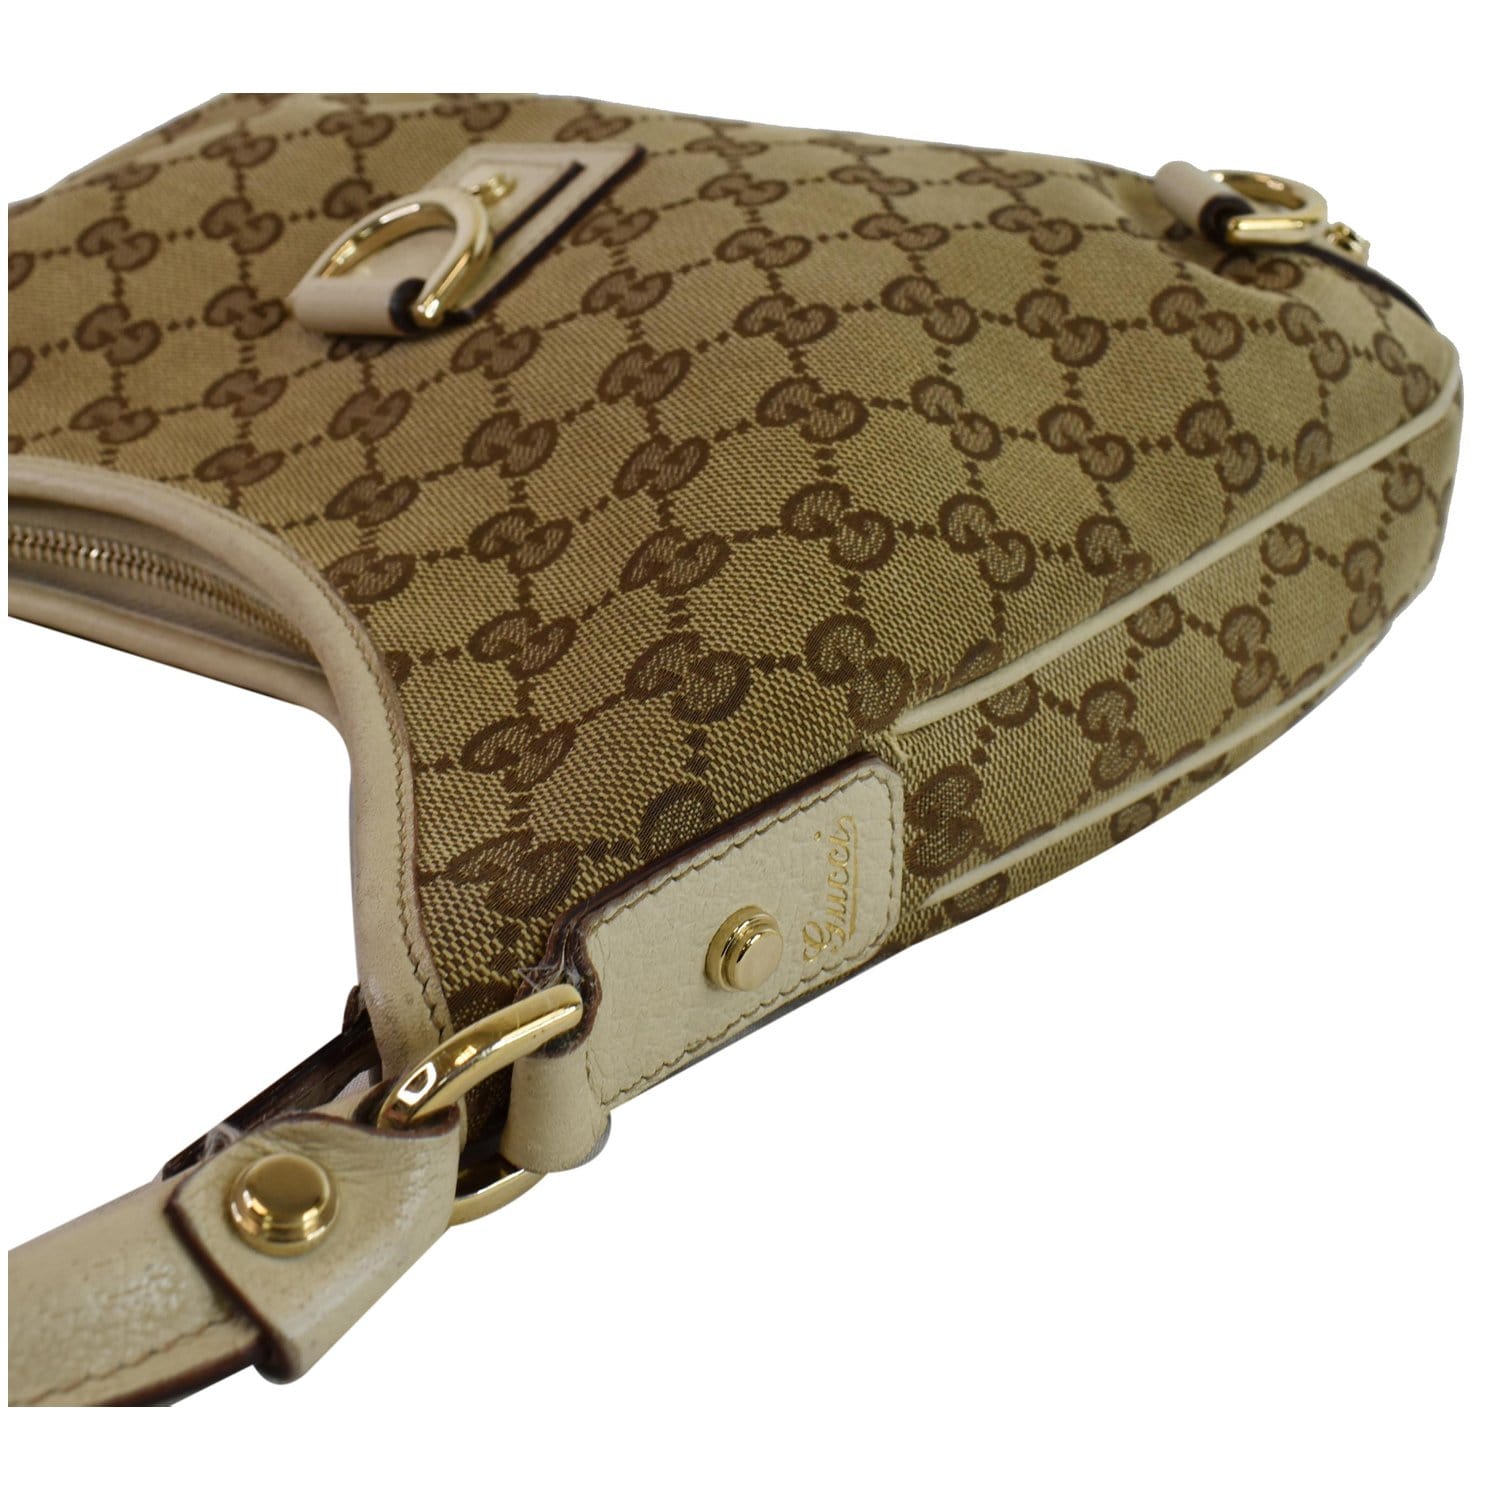 Gucci GG Canvas Abbey D-Ring Hobo Bag 130738 Beige Cloth ref